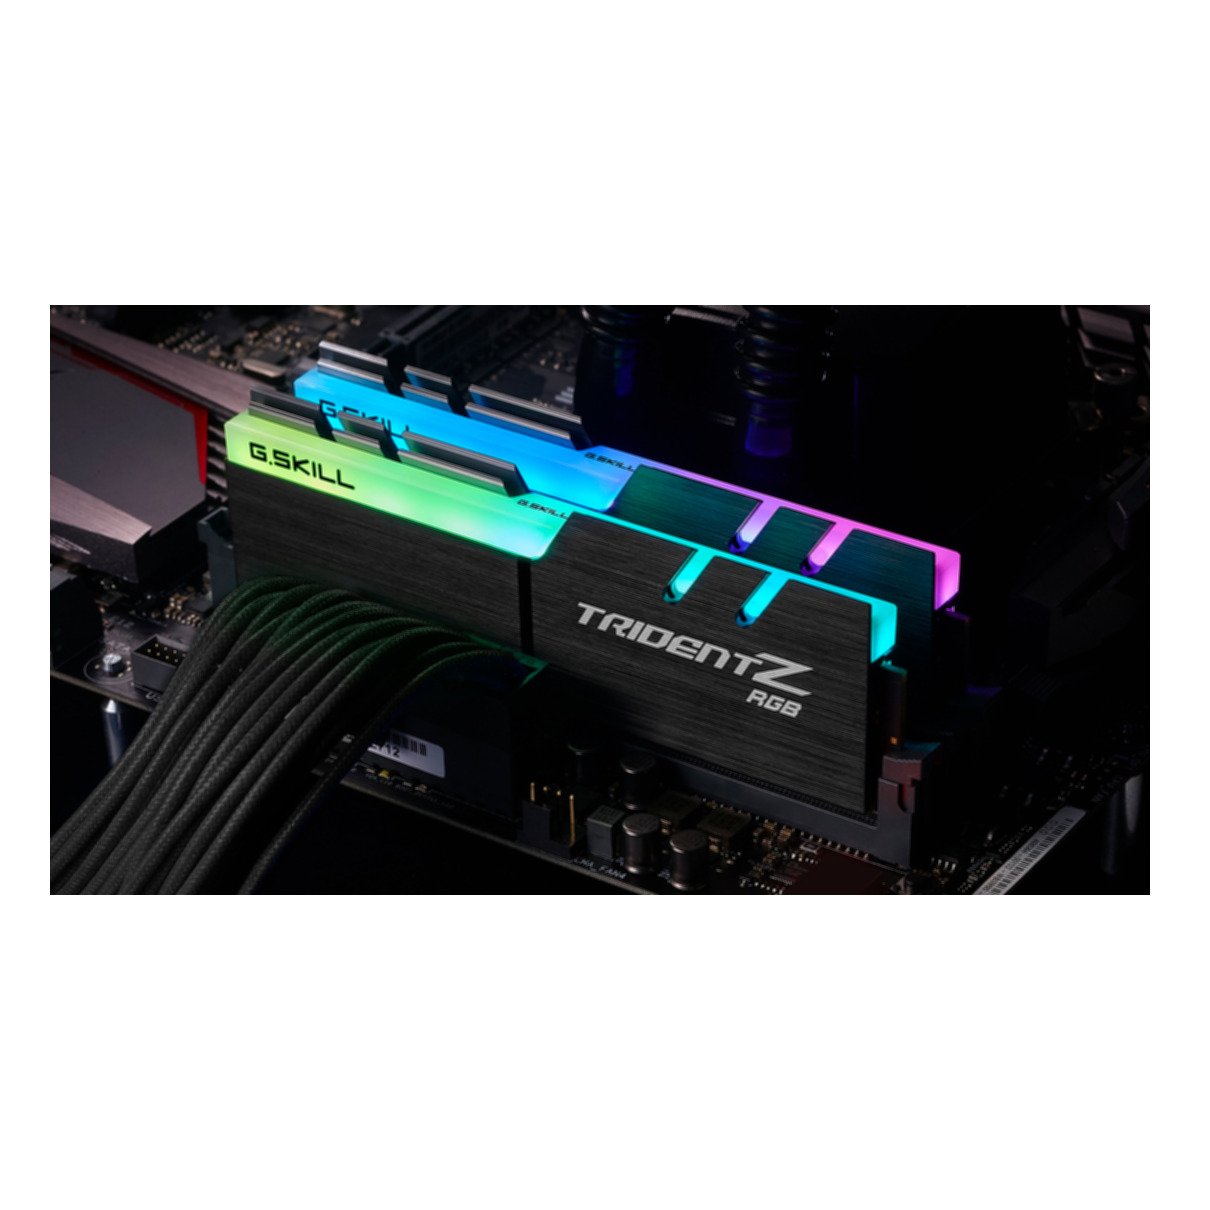 GB 32 G.SKILL DDR4 Arbeitsspeicher F4-3600C16D-32GTZR